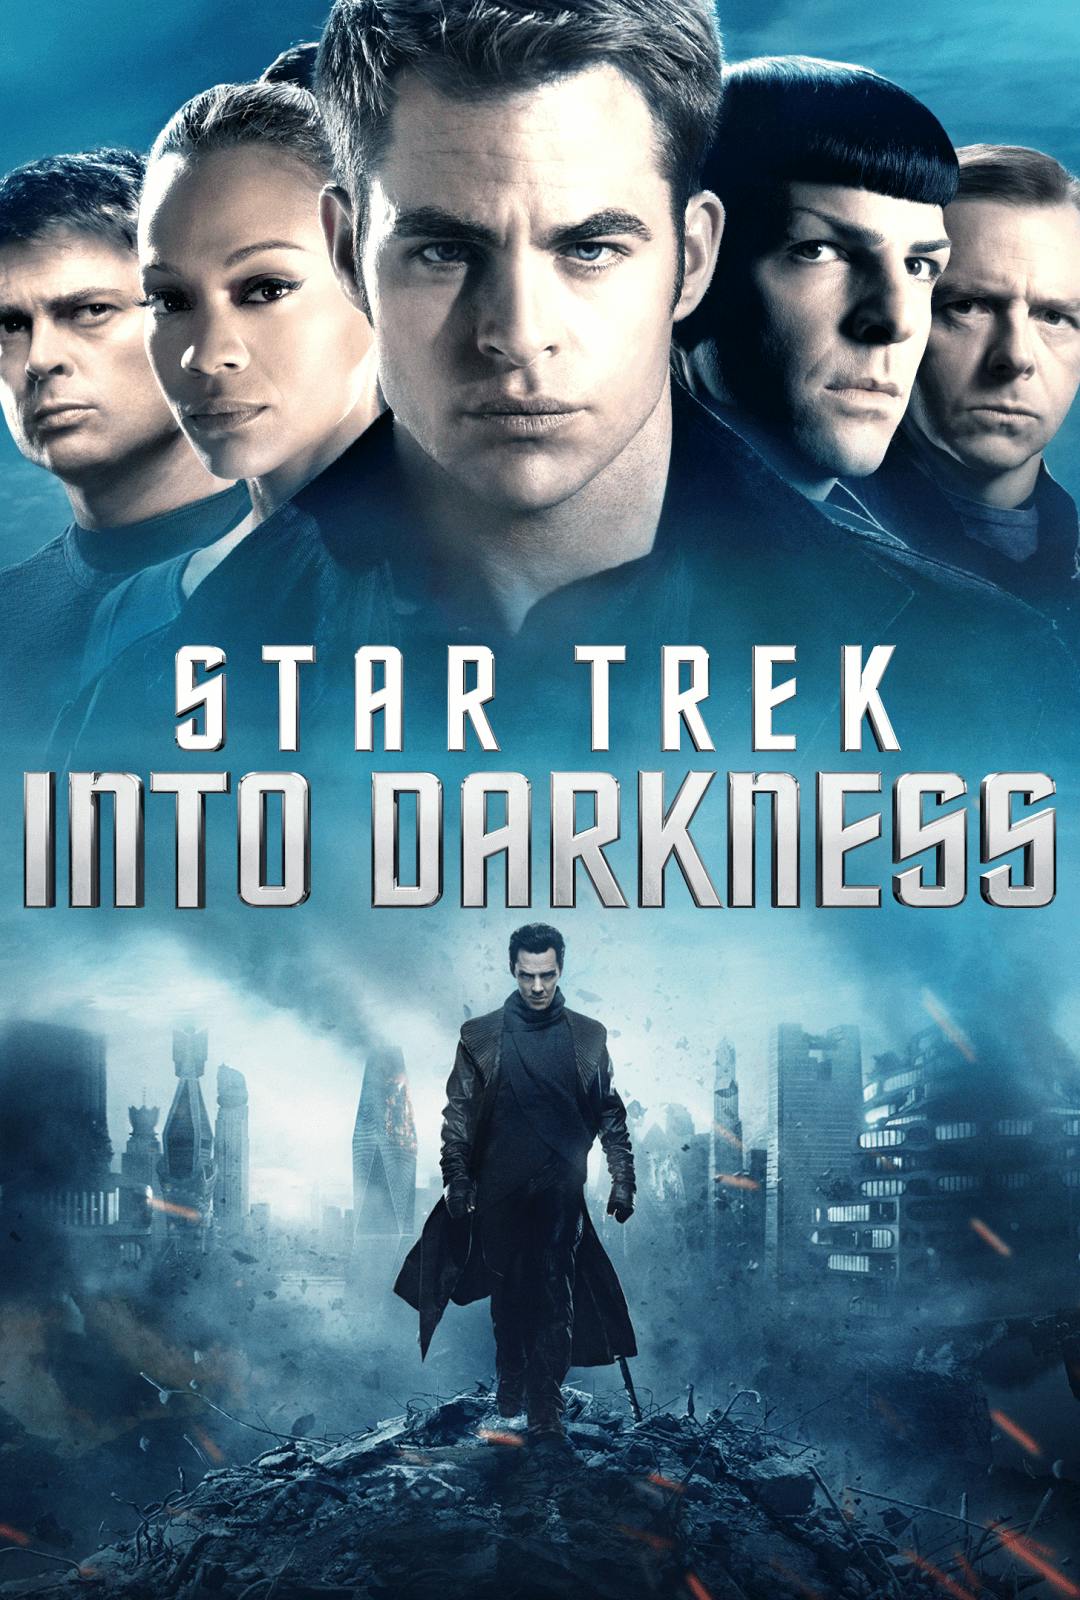 Poster art for Star Trek: Into Darkness